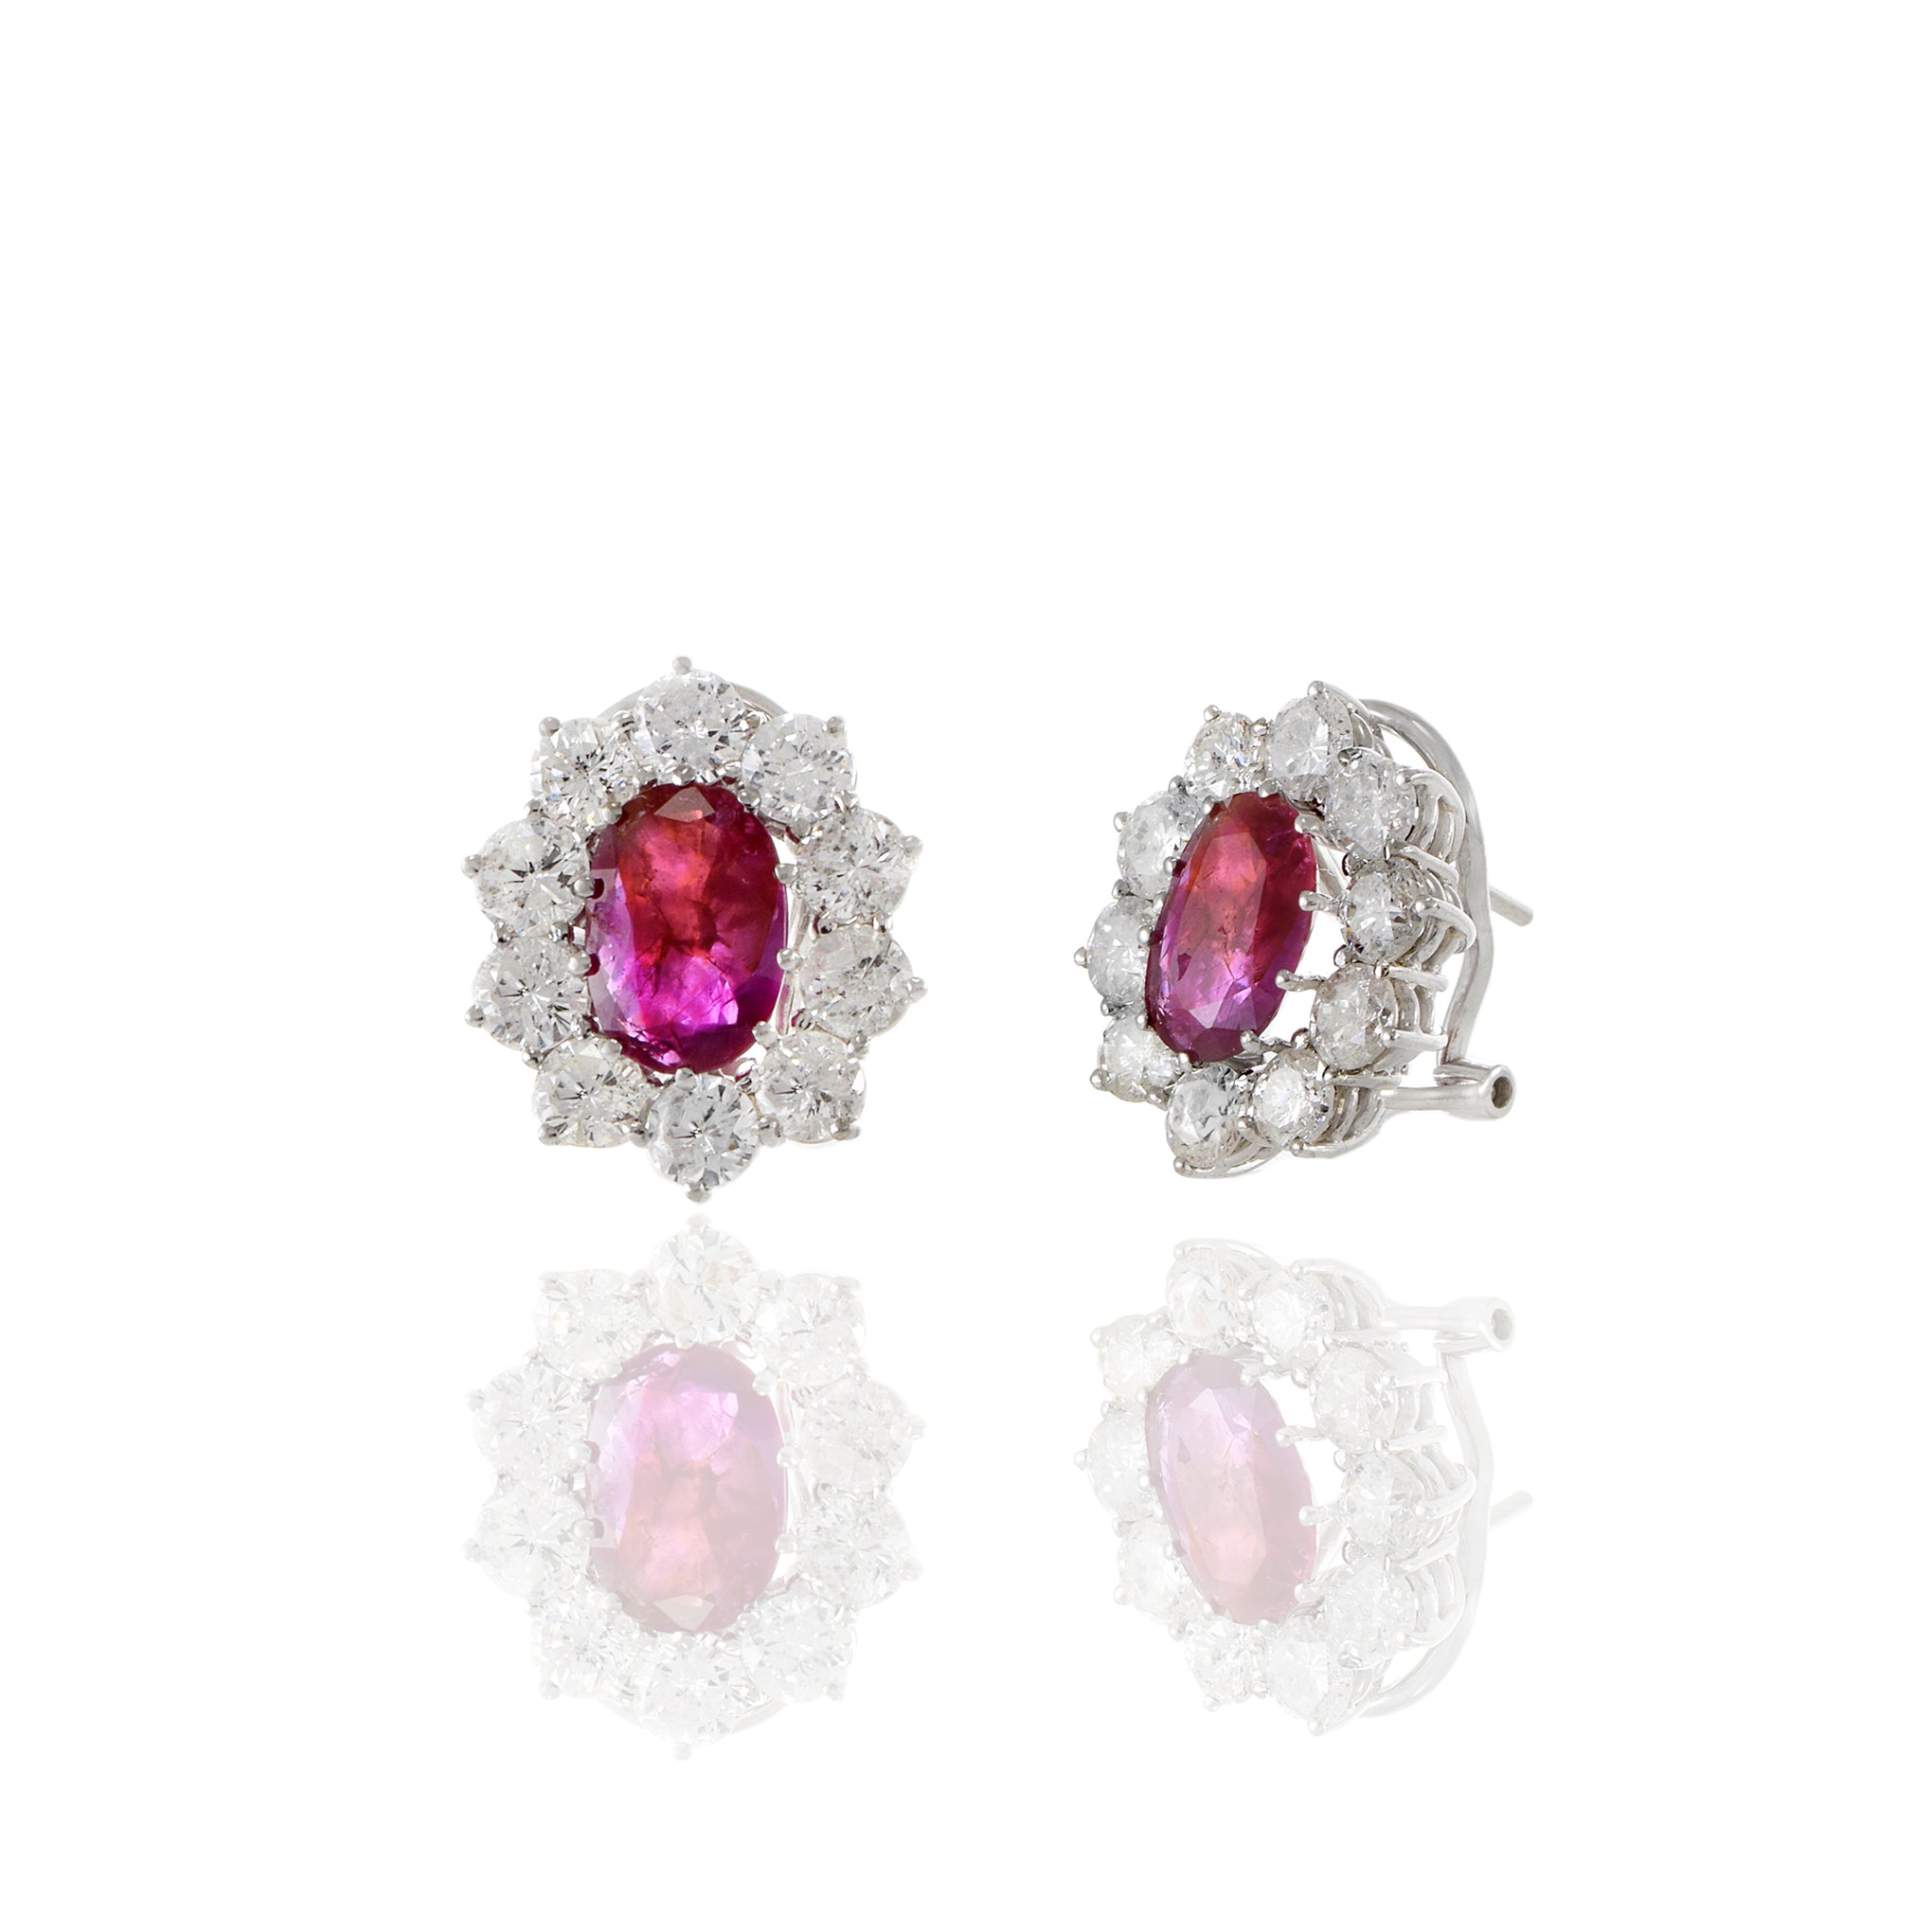 14KT White Gold Oval Burmese Ruby And Diamond Earrings